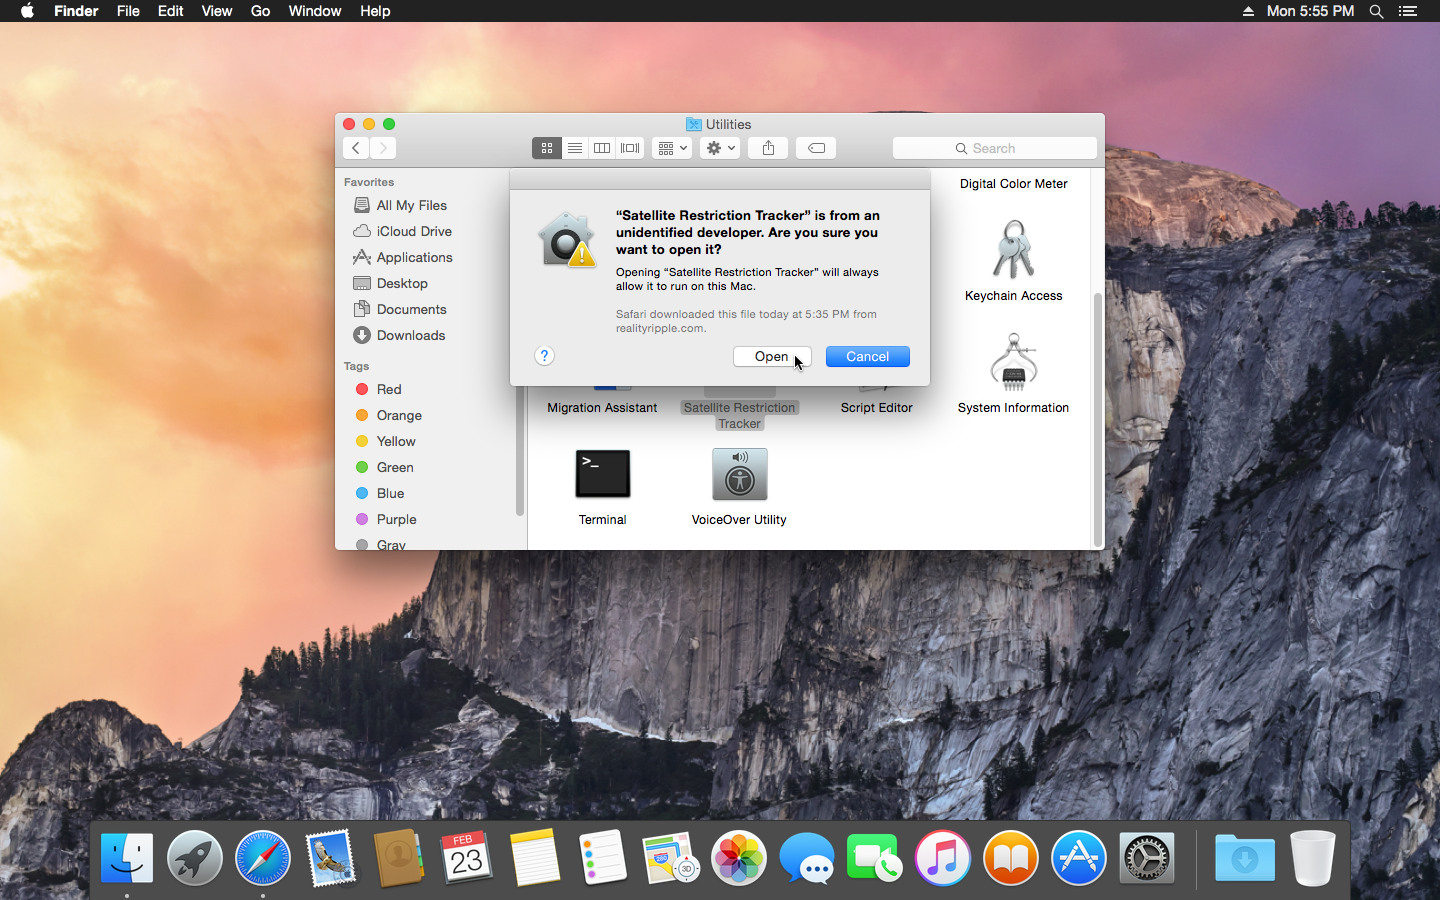 macOS 10.10
🍎